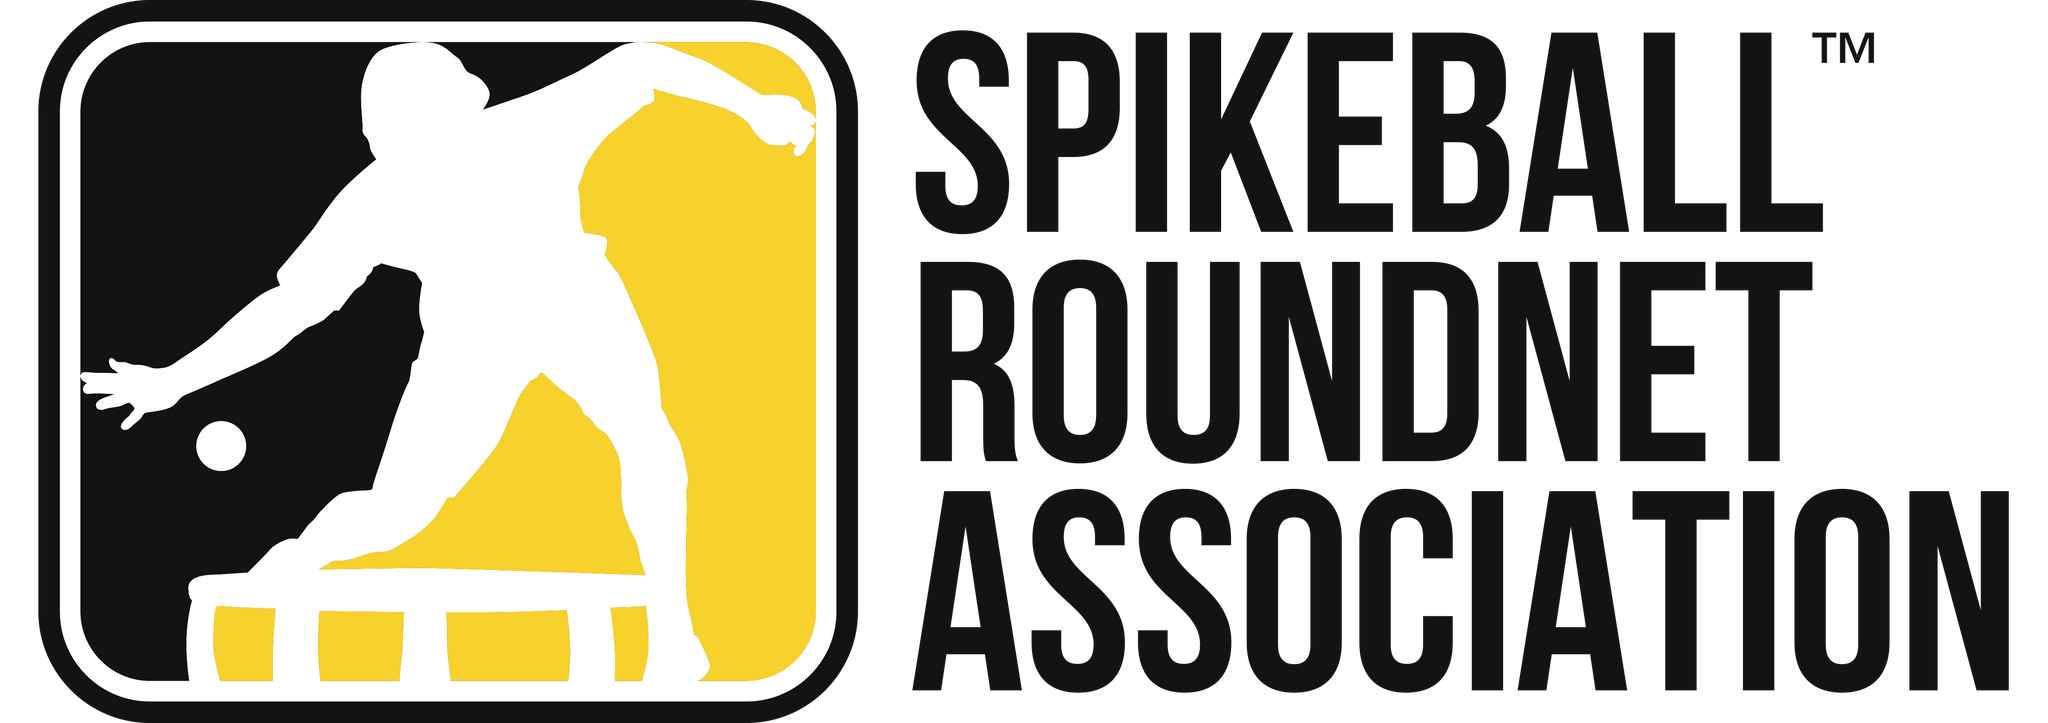 Spikeball™ Roundnet Association 2017 Top 15 Players by Region